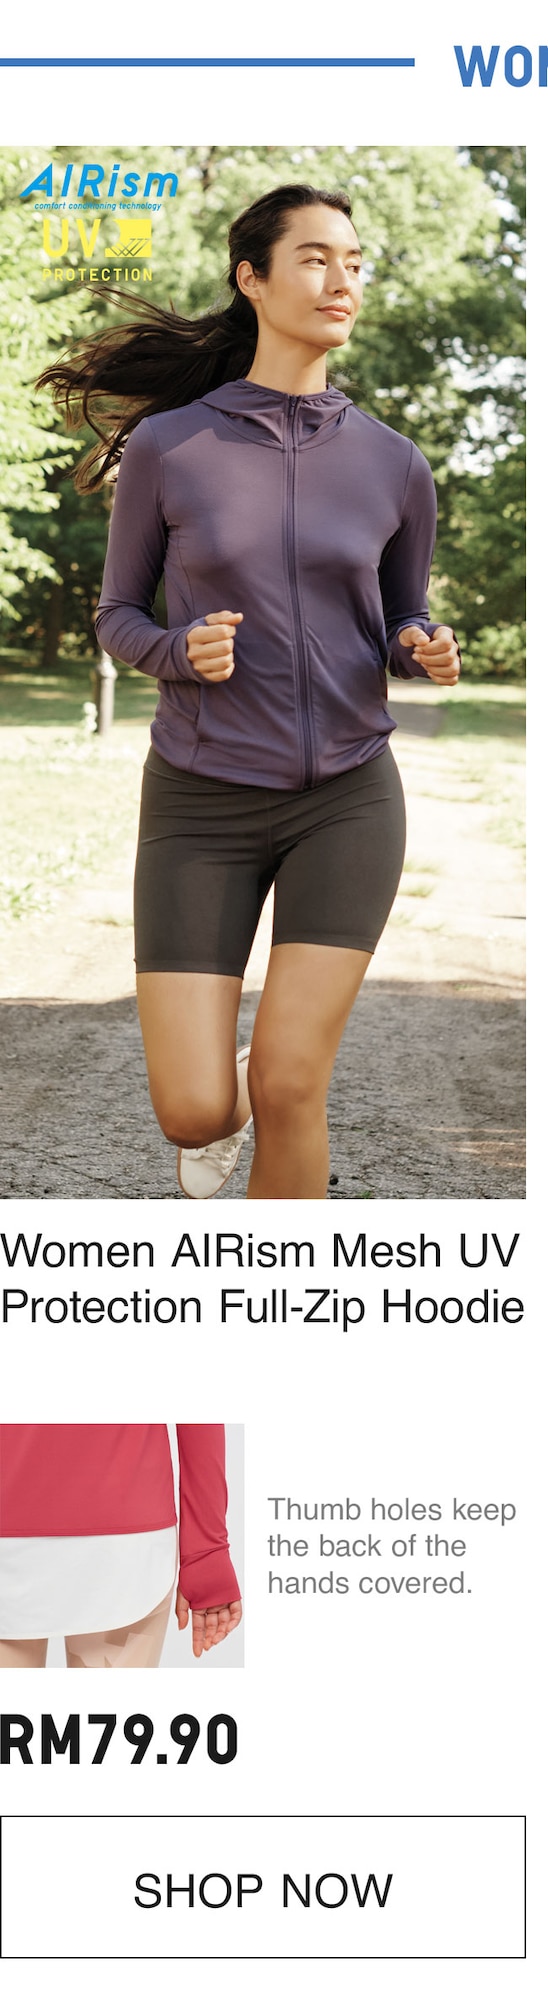 WOMEN AIRISM MESH UV HOODIE